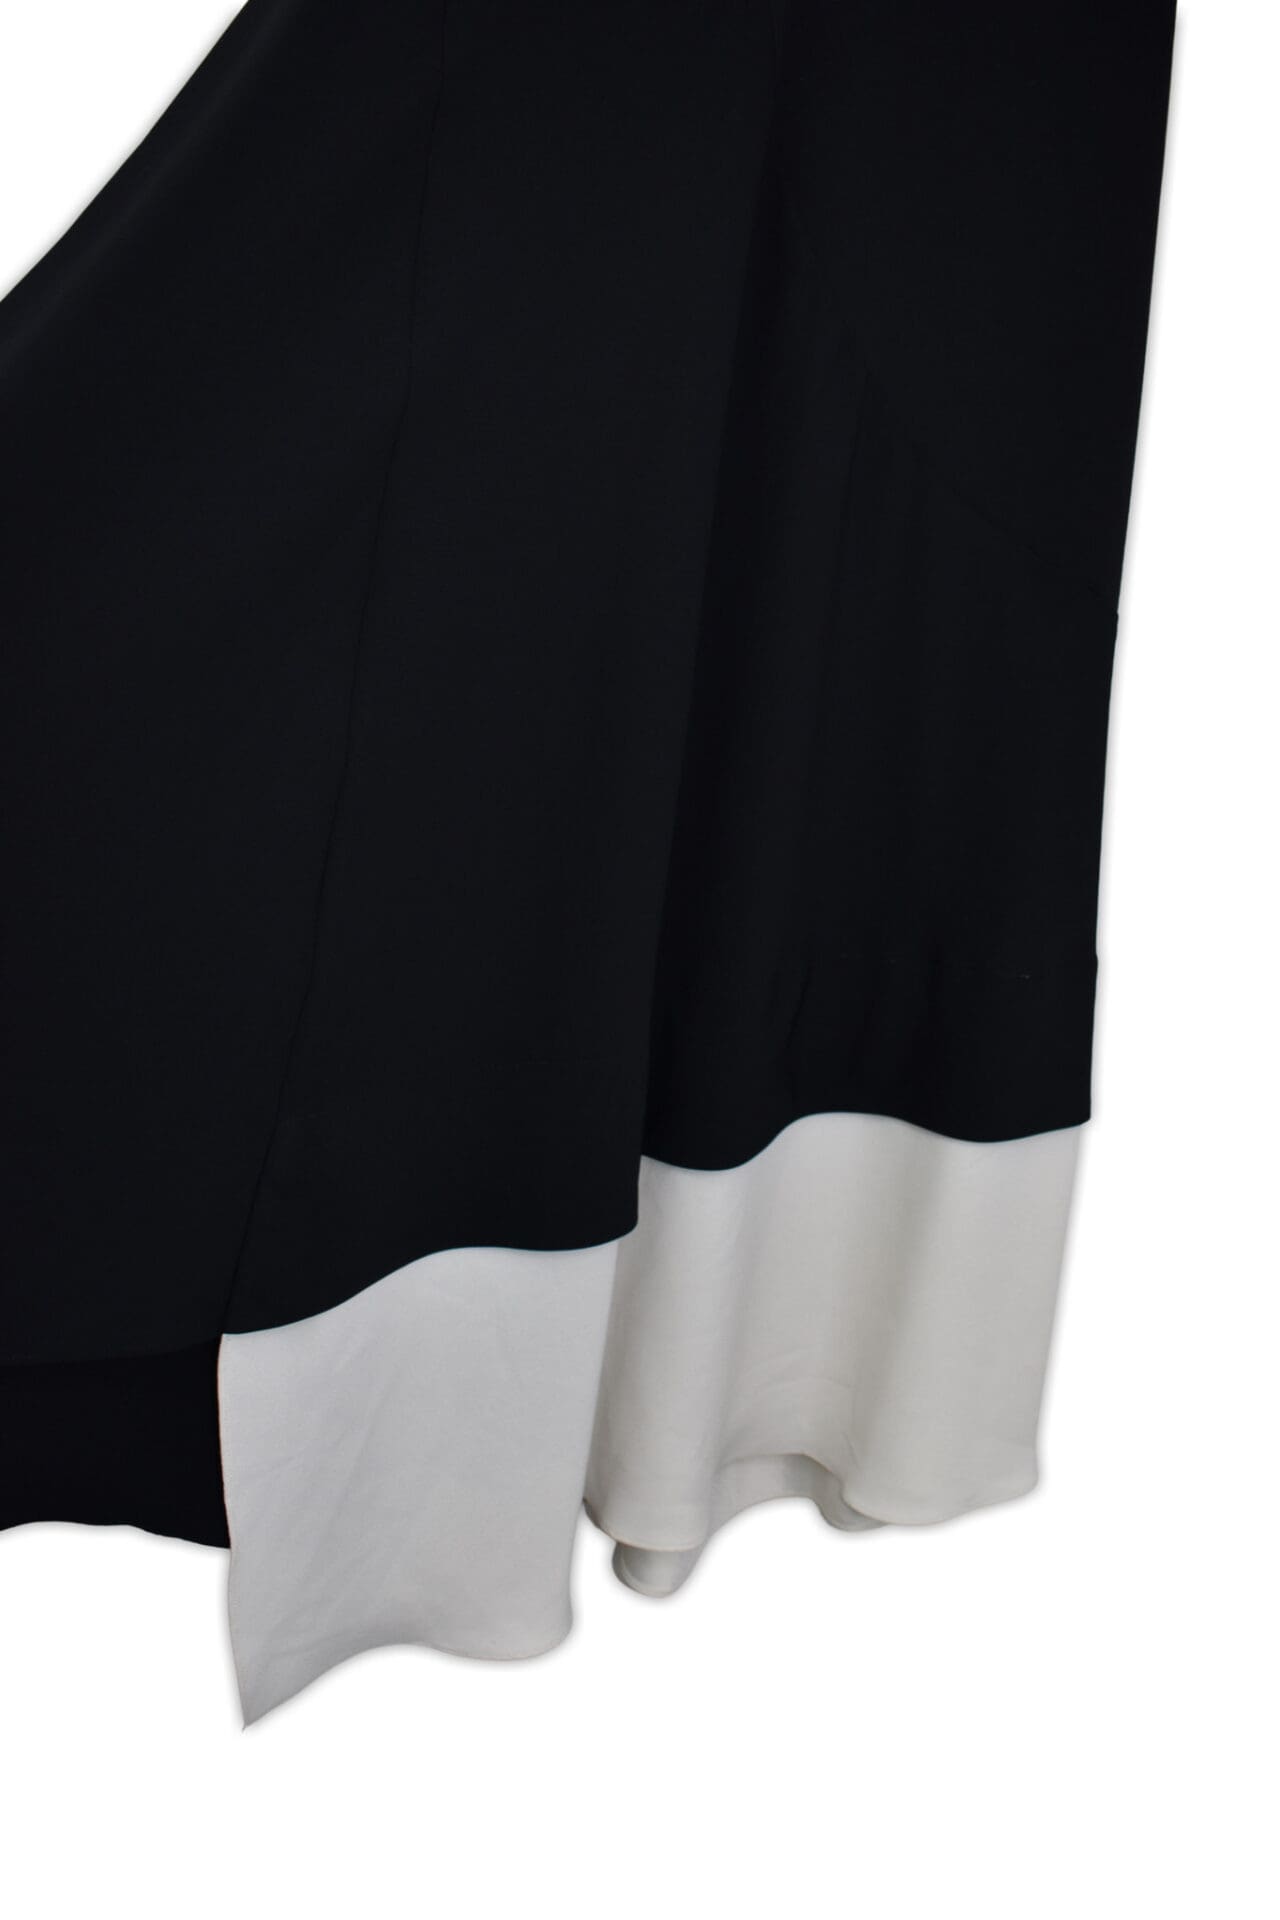 Crew neck, asymmetric skirt design